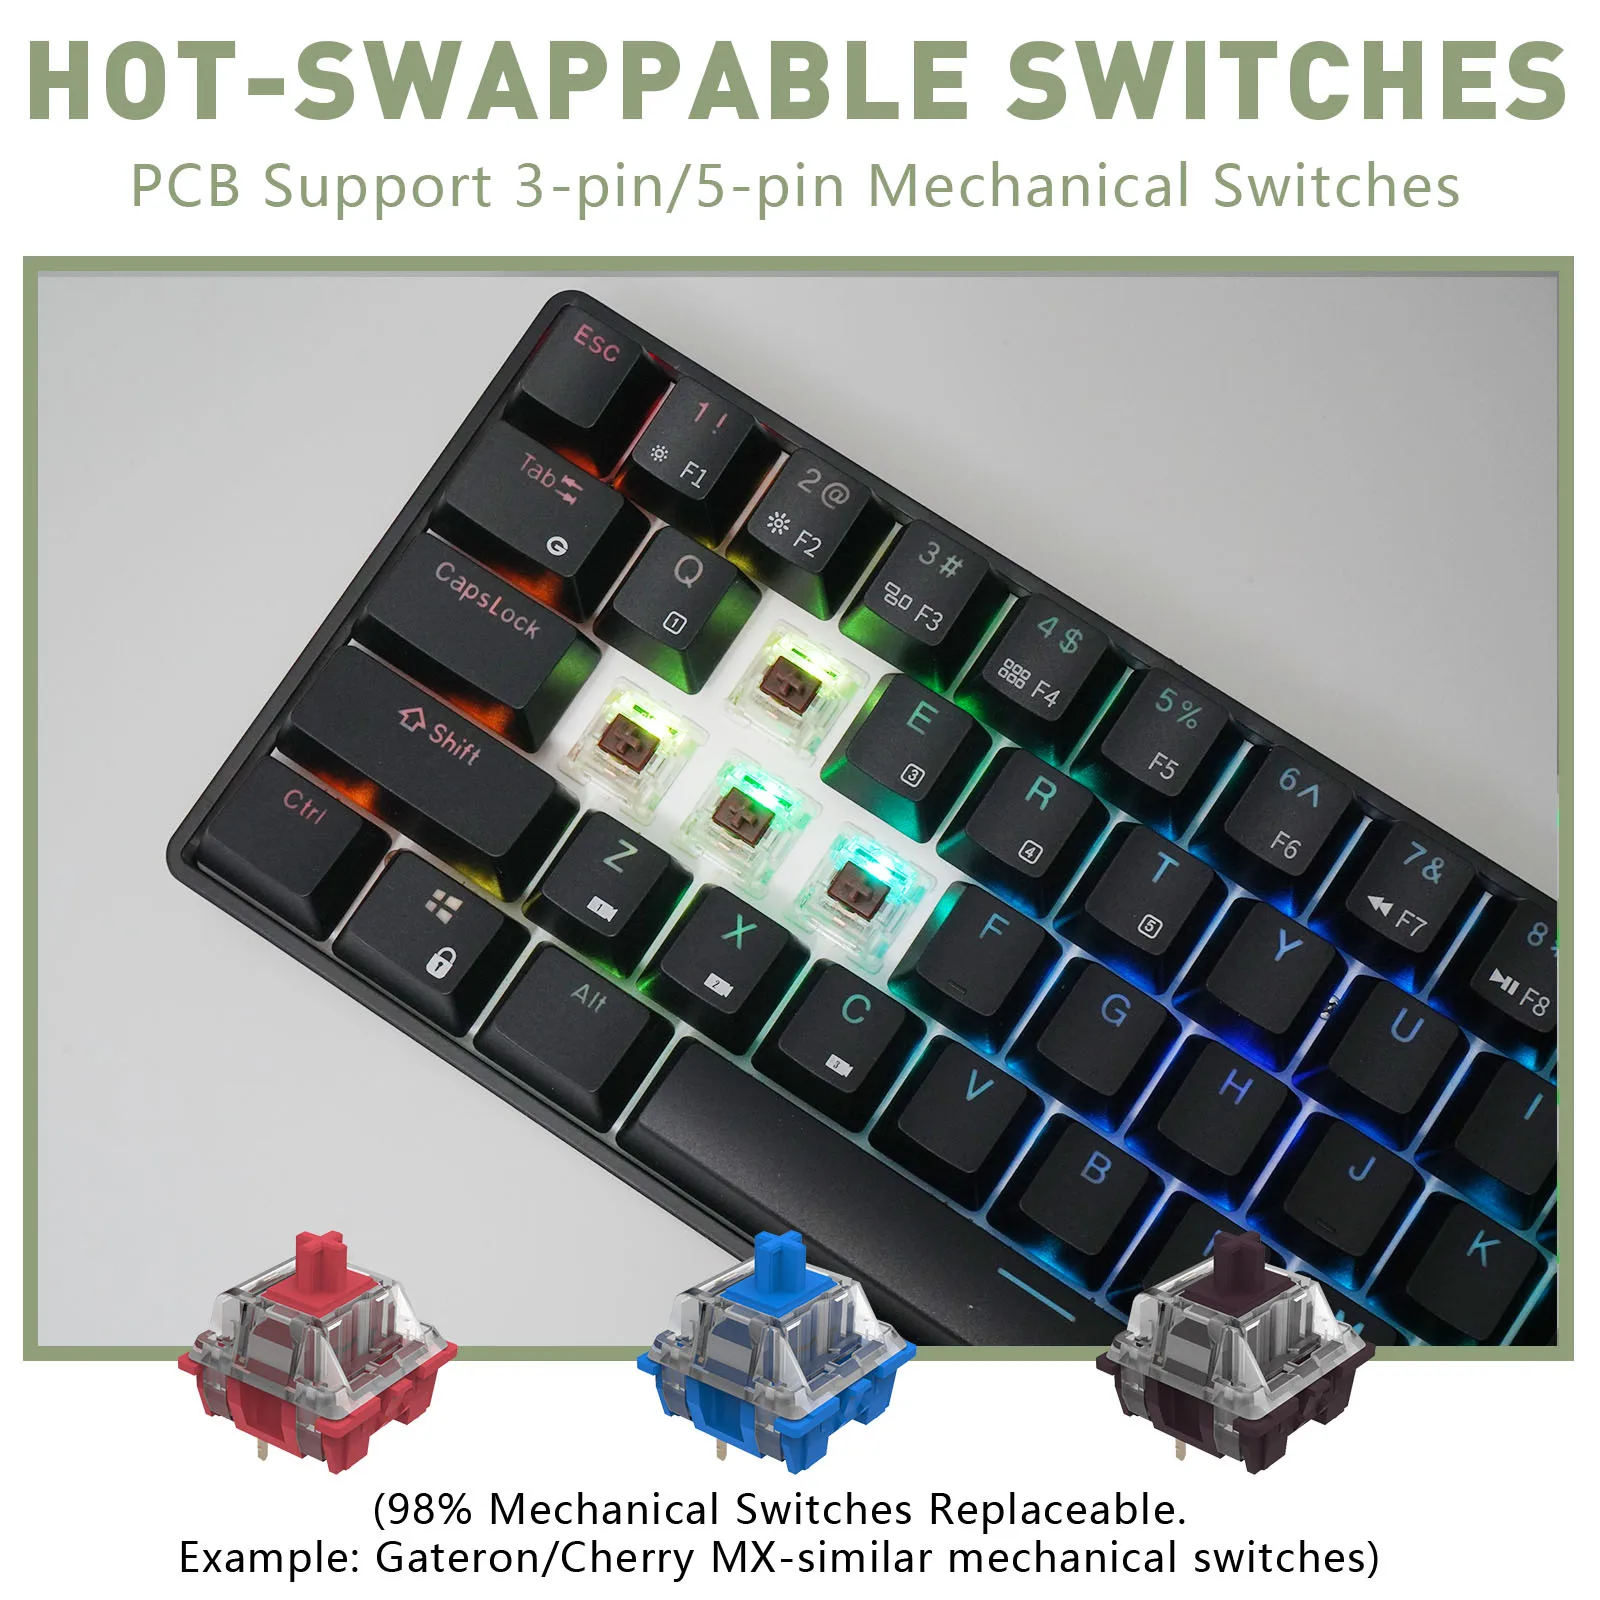 RK68 (RK855) 65% Bluetooth RGB Hot Swappble Mechanical Gaming Keyboard Compact 68 Keys Wireless Gamer Keyboard for PC Laptop enlarge